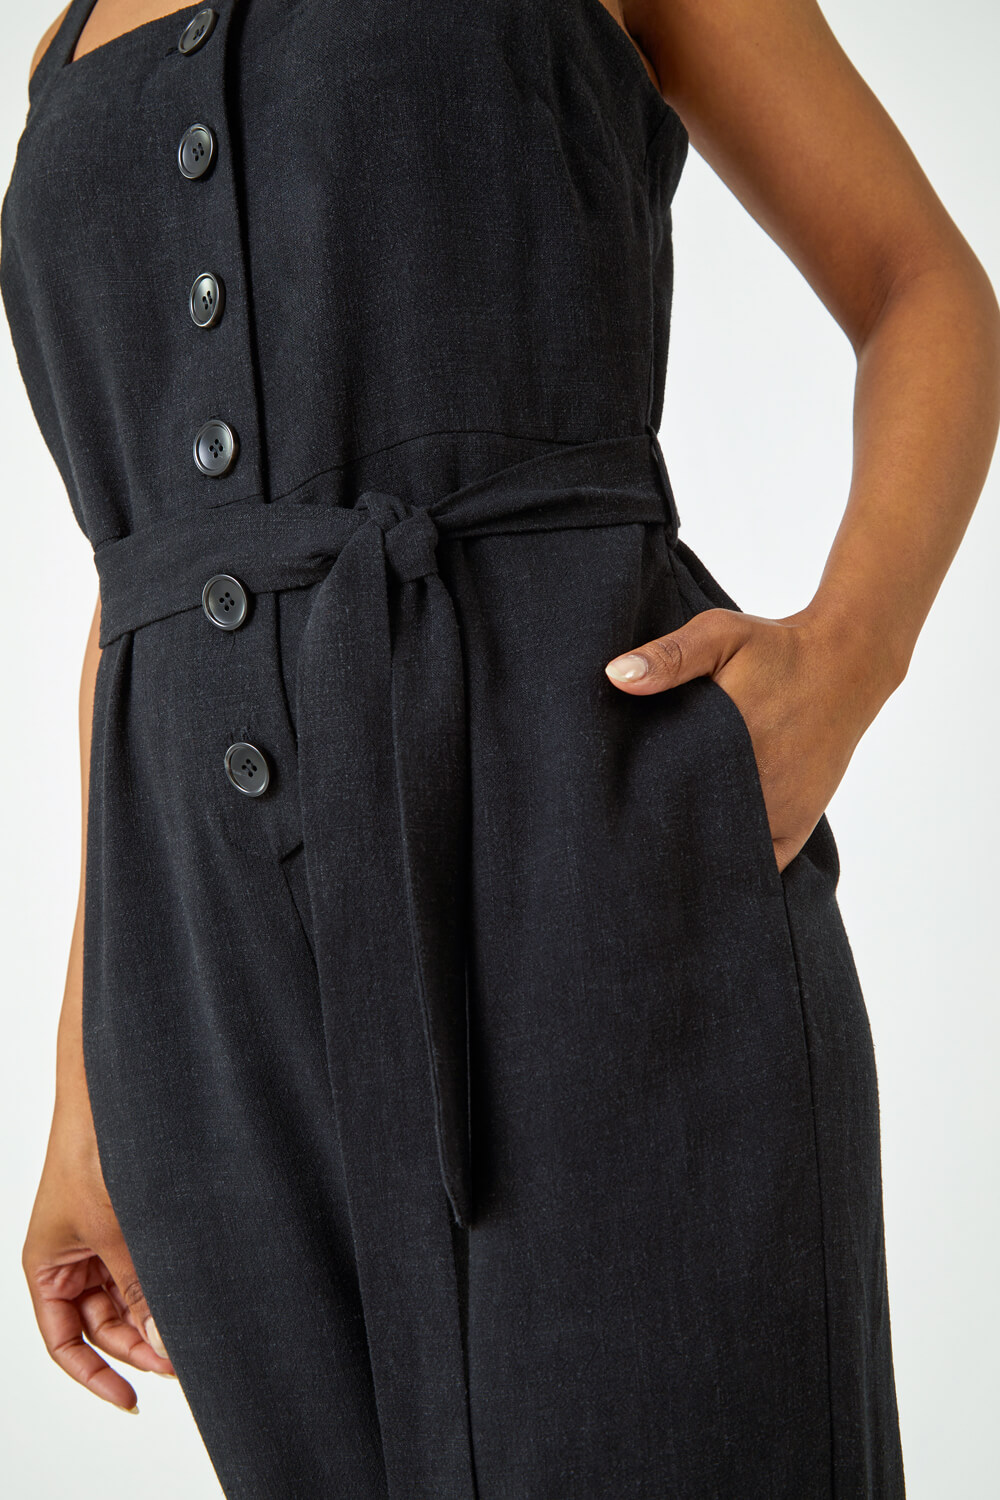 Black Petite Sleeveless Linen Blend Jumpsuit, Image 5 of 5